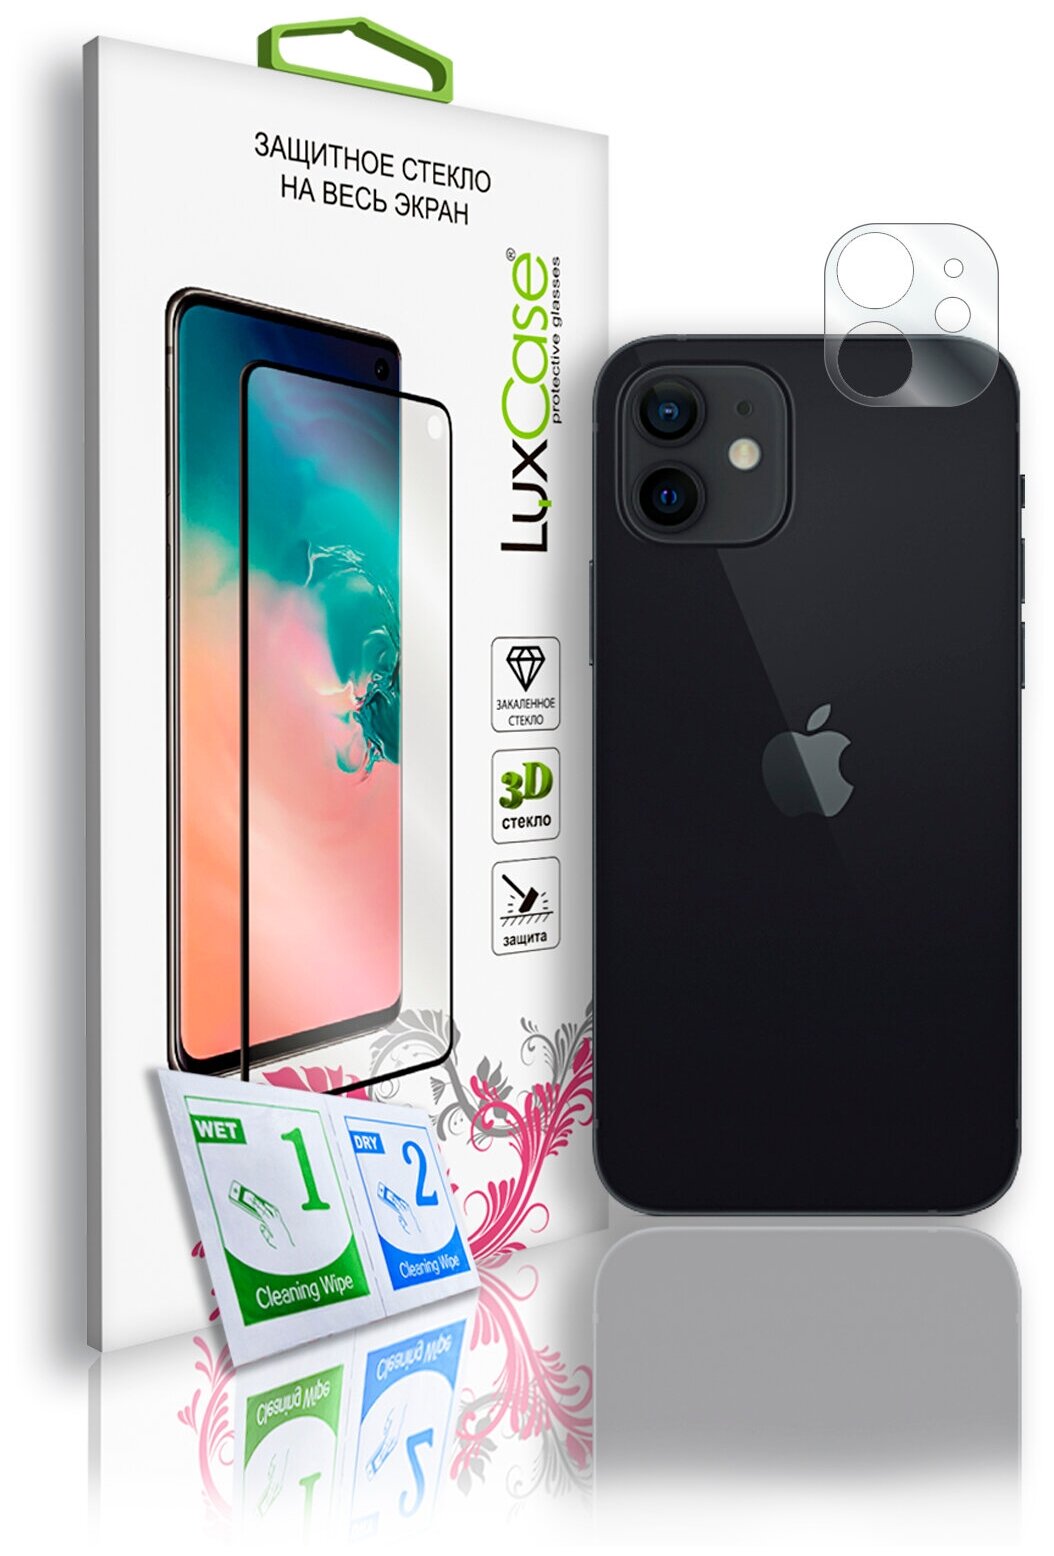 Защитное стекло LuxCase для камеры iPhone 12 mini на камеру Айфон 12 мини На плоскую часть экрана 033 мм